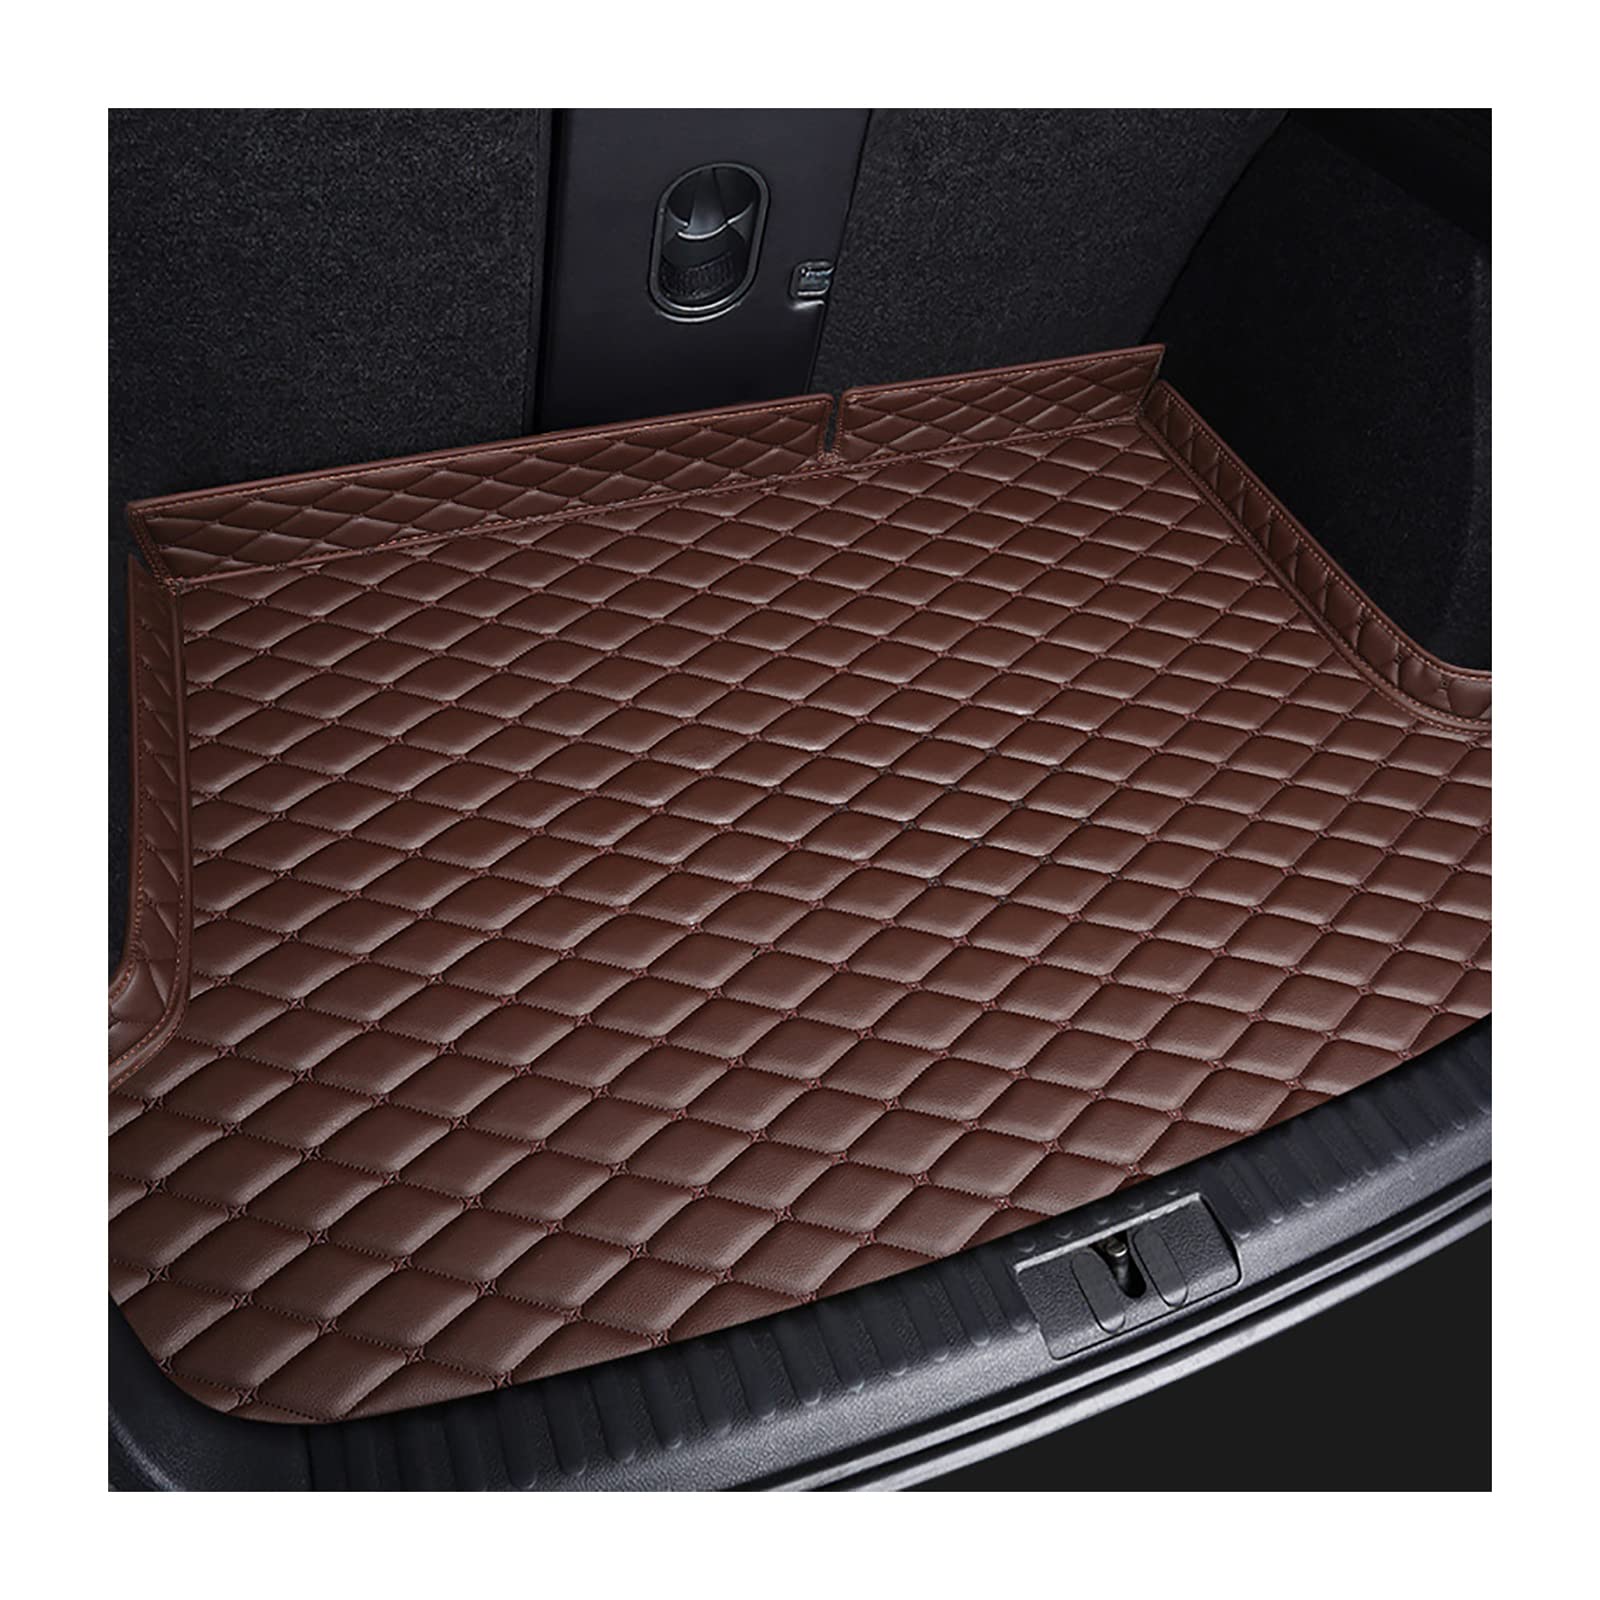 Car Boot Protection Mat mit Erhöhtem Rand, Kompatibel mit Hyundai Encino 2018+, Boot Protector Boot Mat Accessories,5-Coffee von YPGHBHD